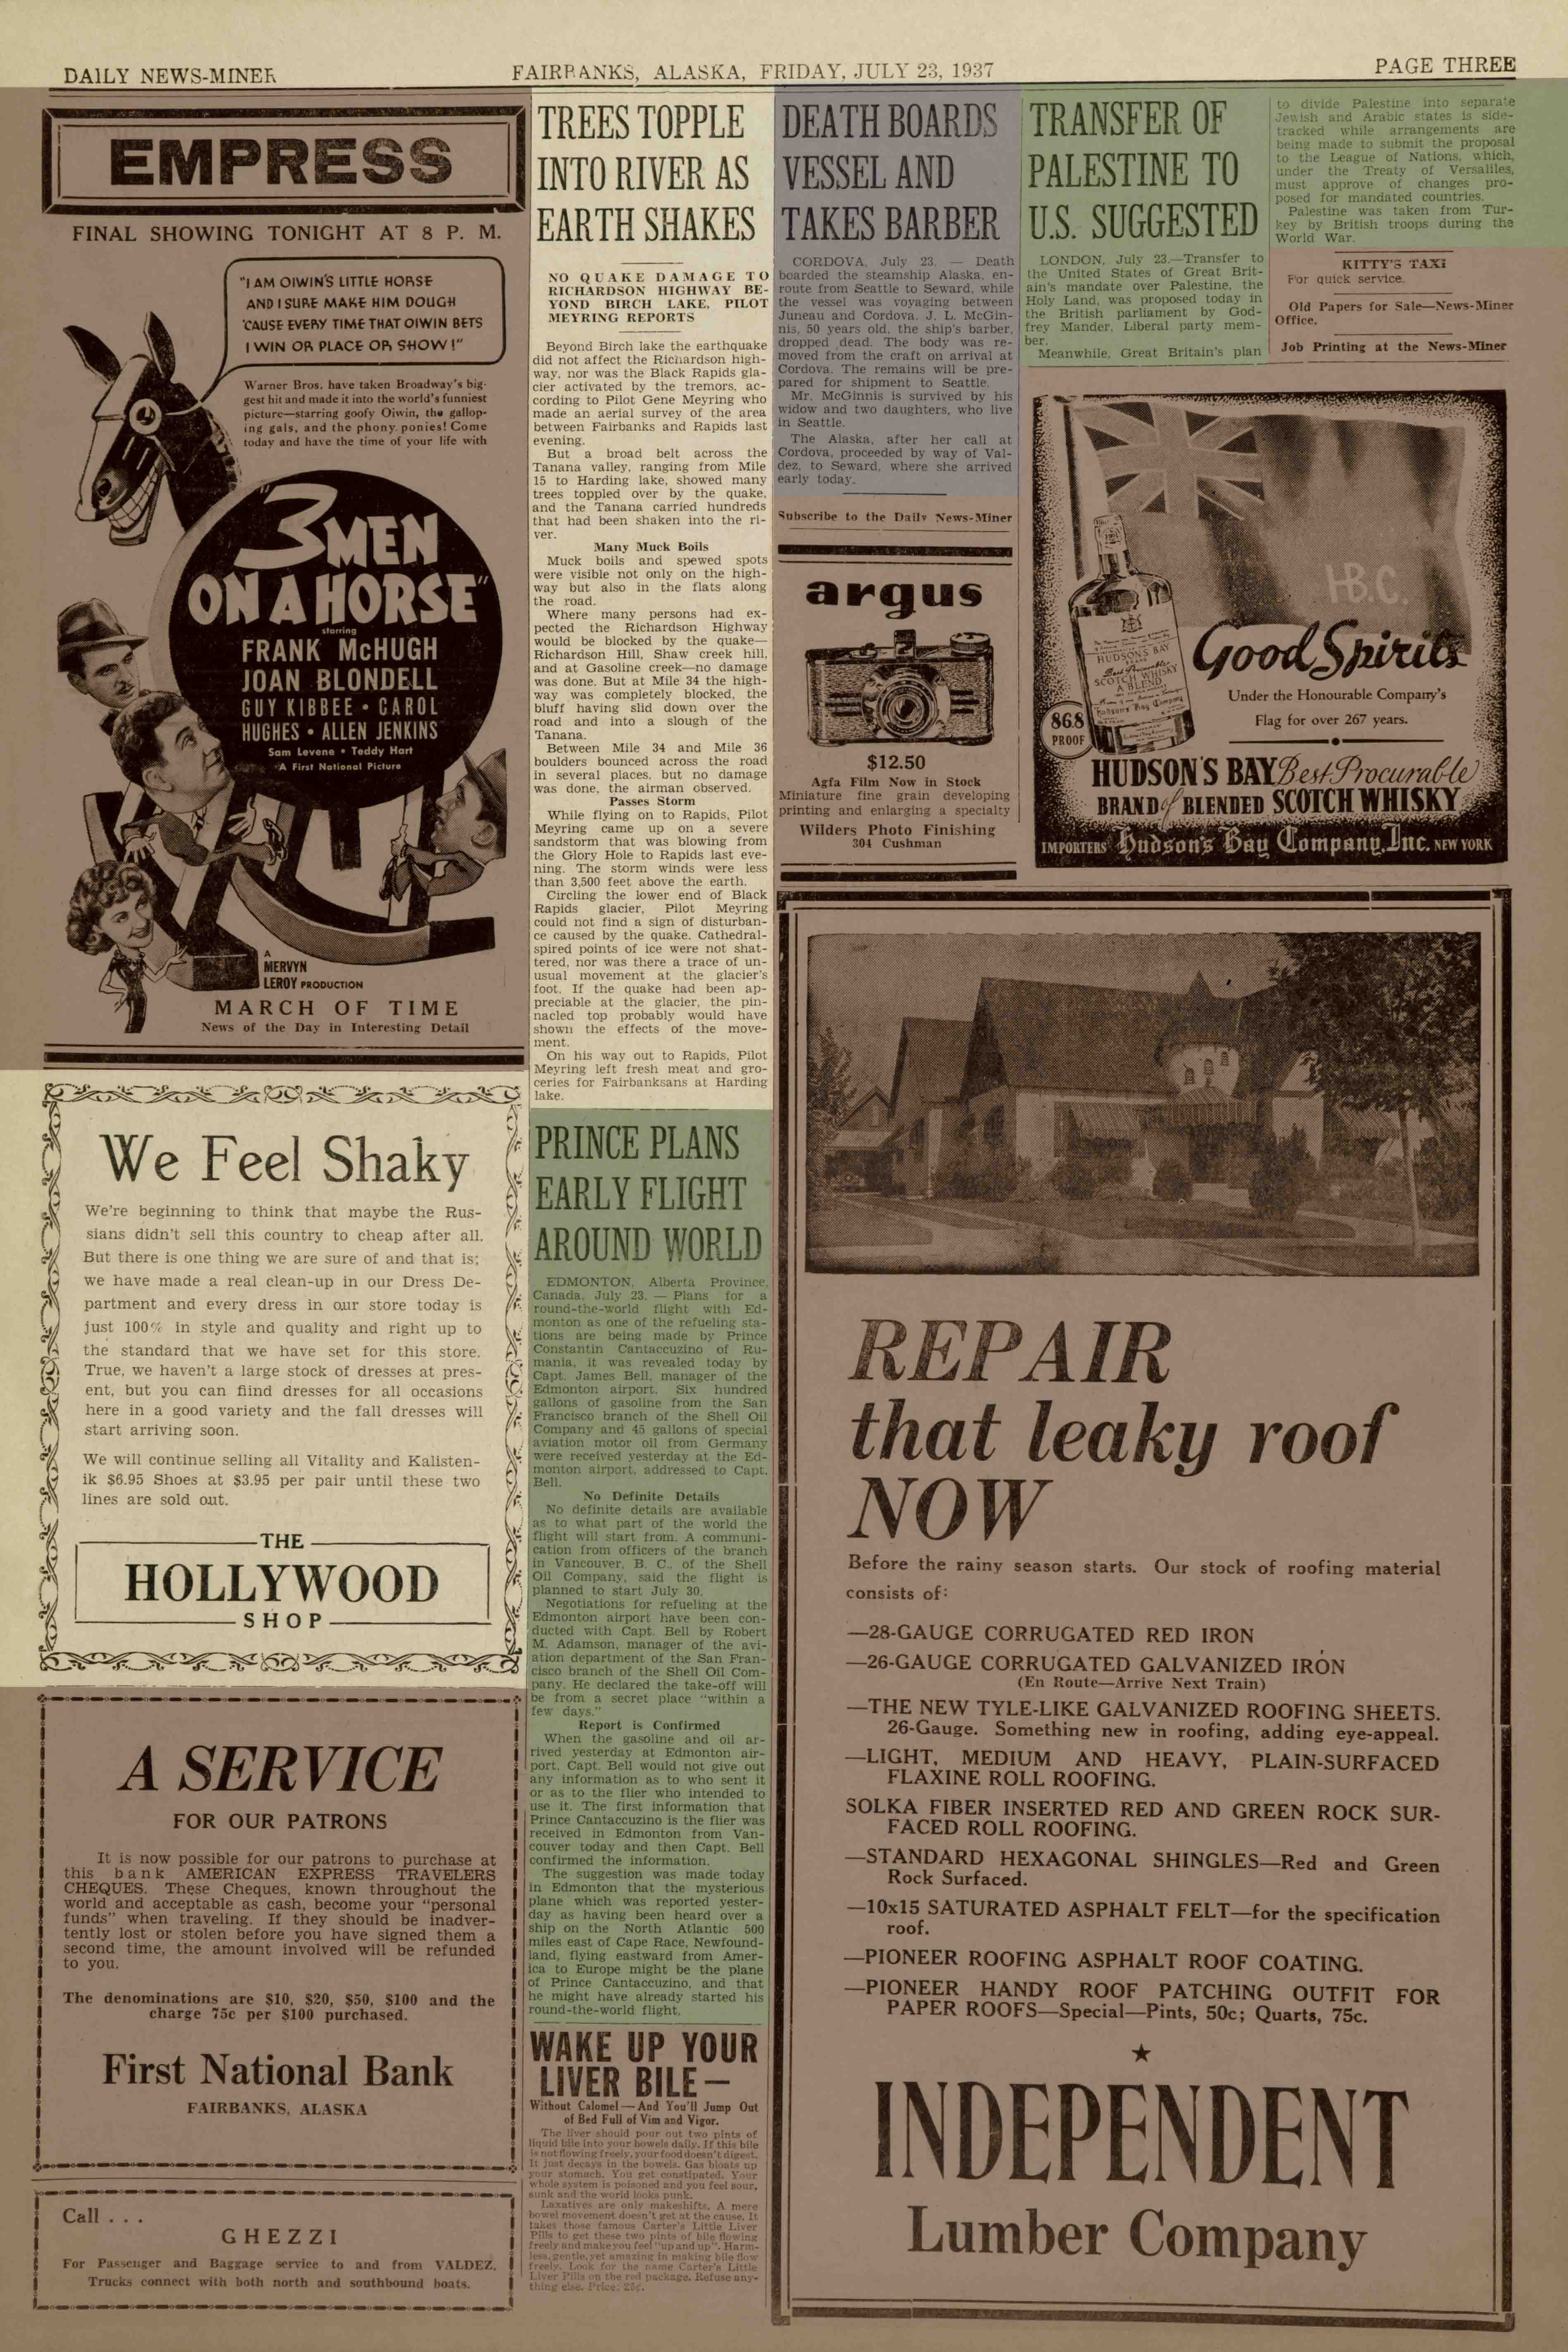 1937 July 23, Fairbanks Daily News-Miner (pg 3)